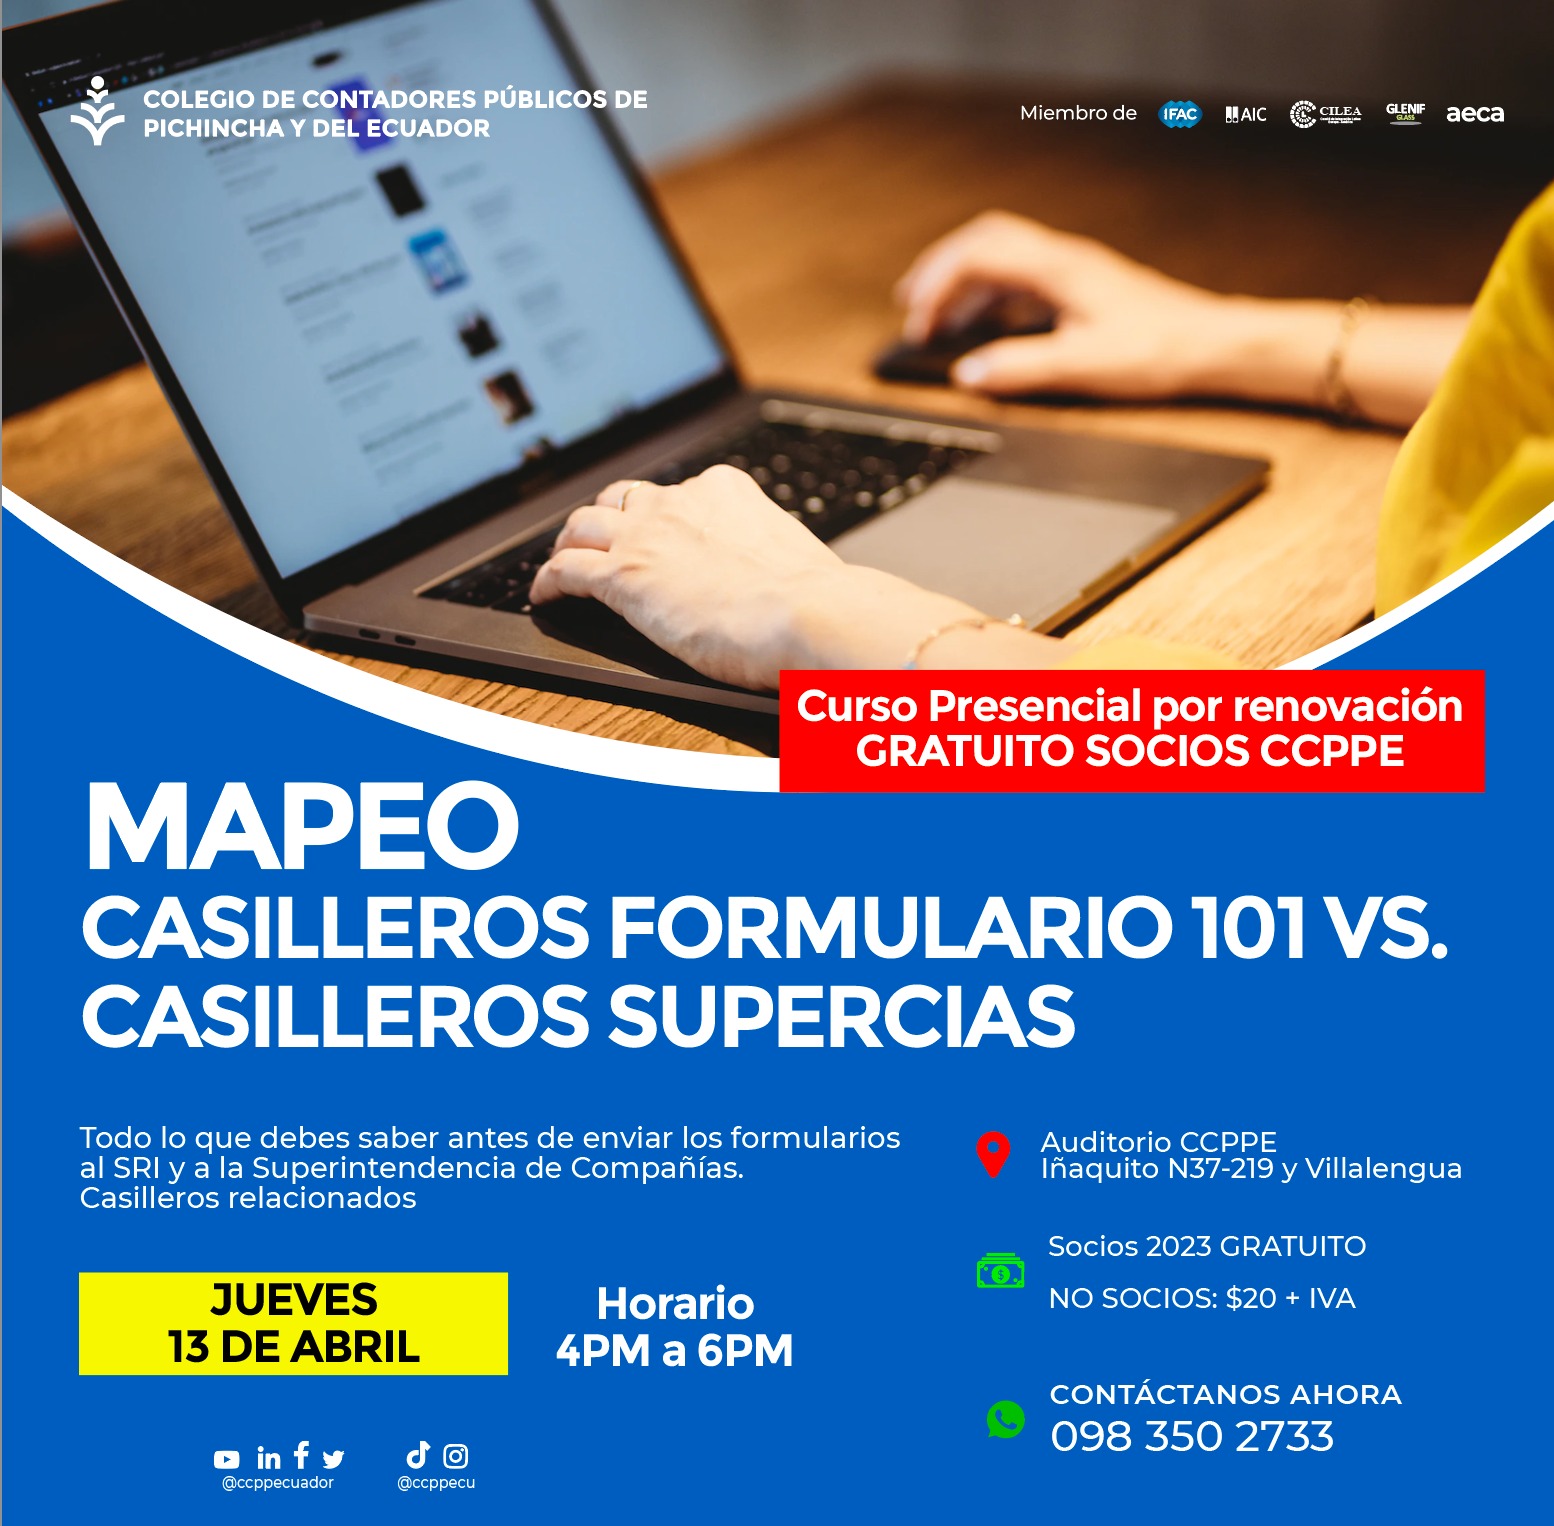 MAPEO CASILLEROS FORMULARIO 101 - 13 ABRIL 2023